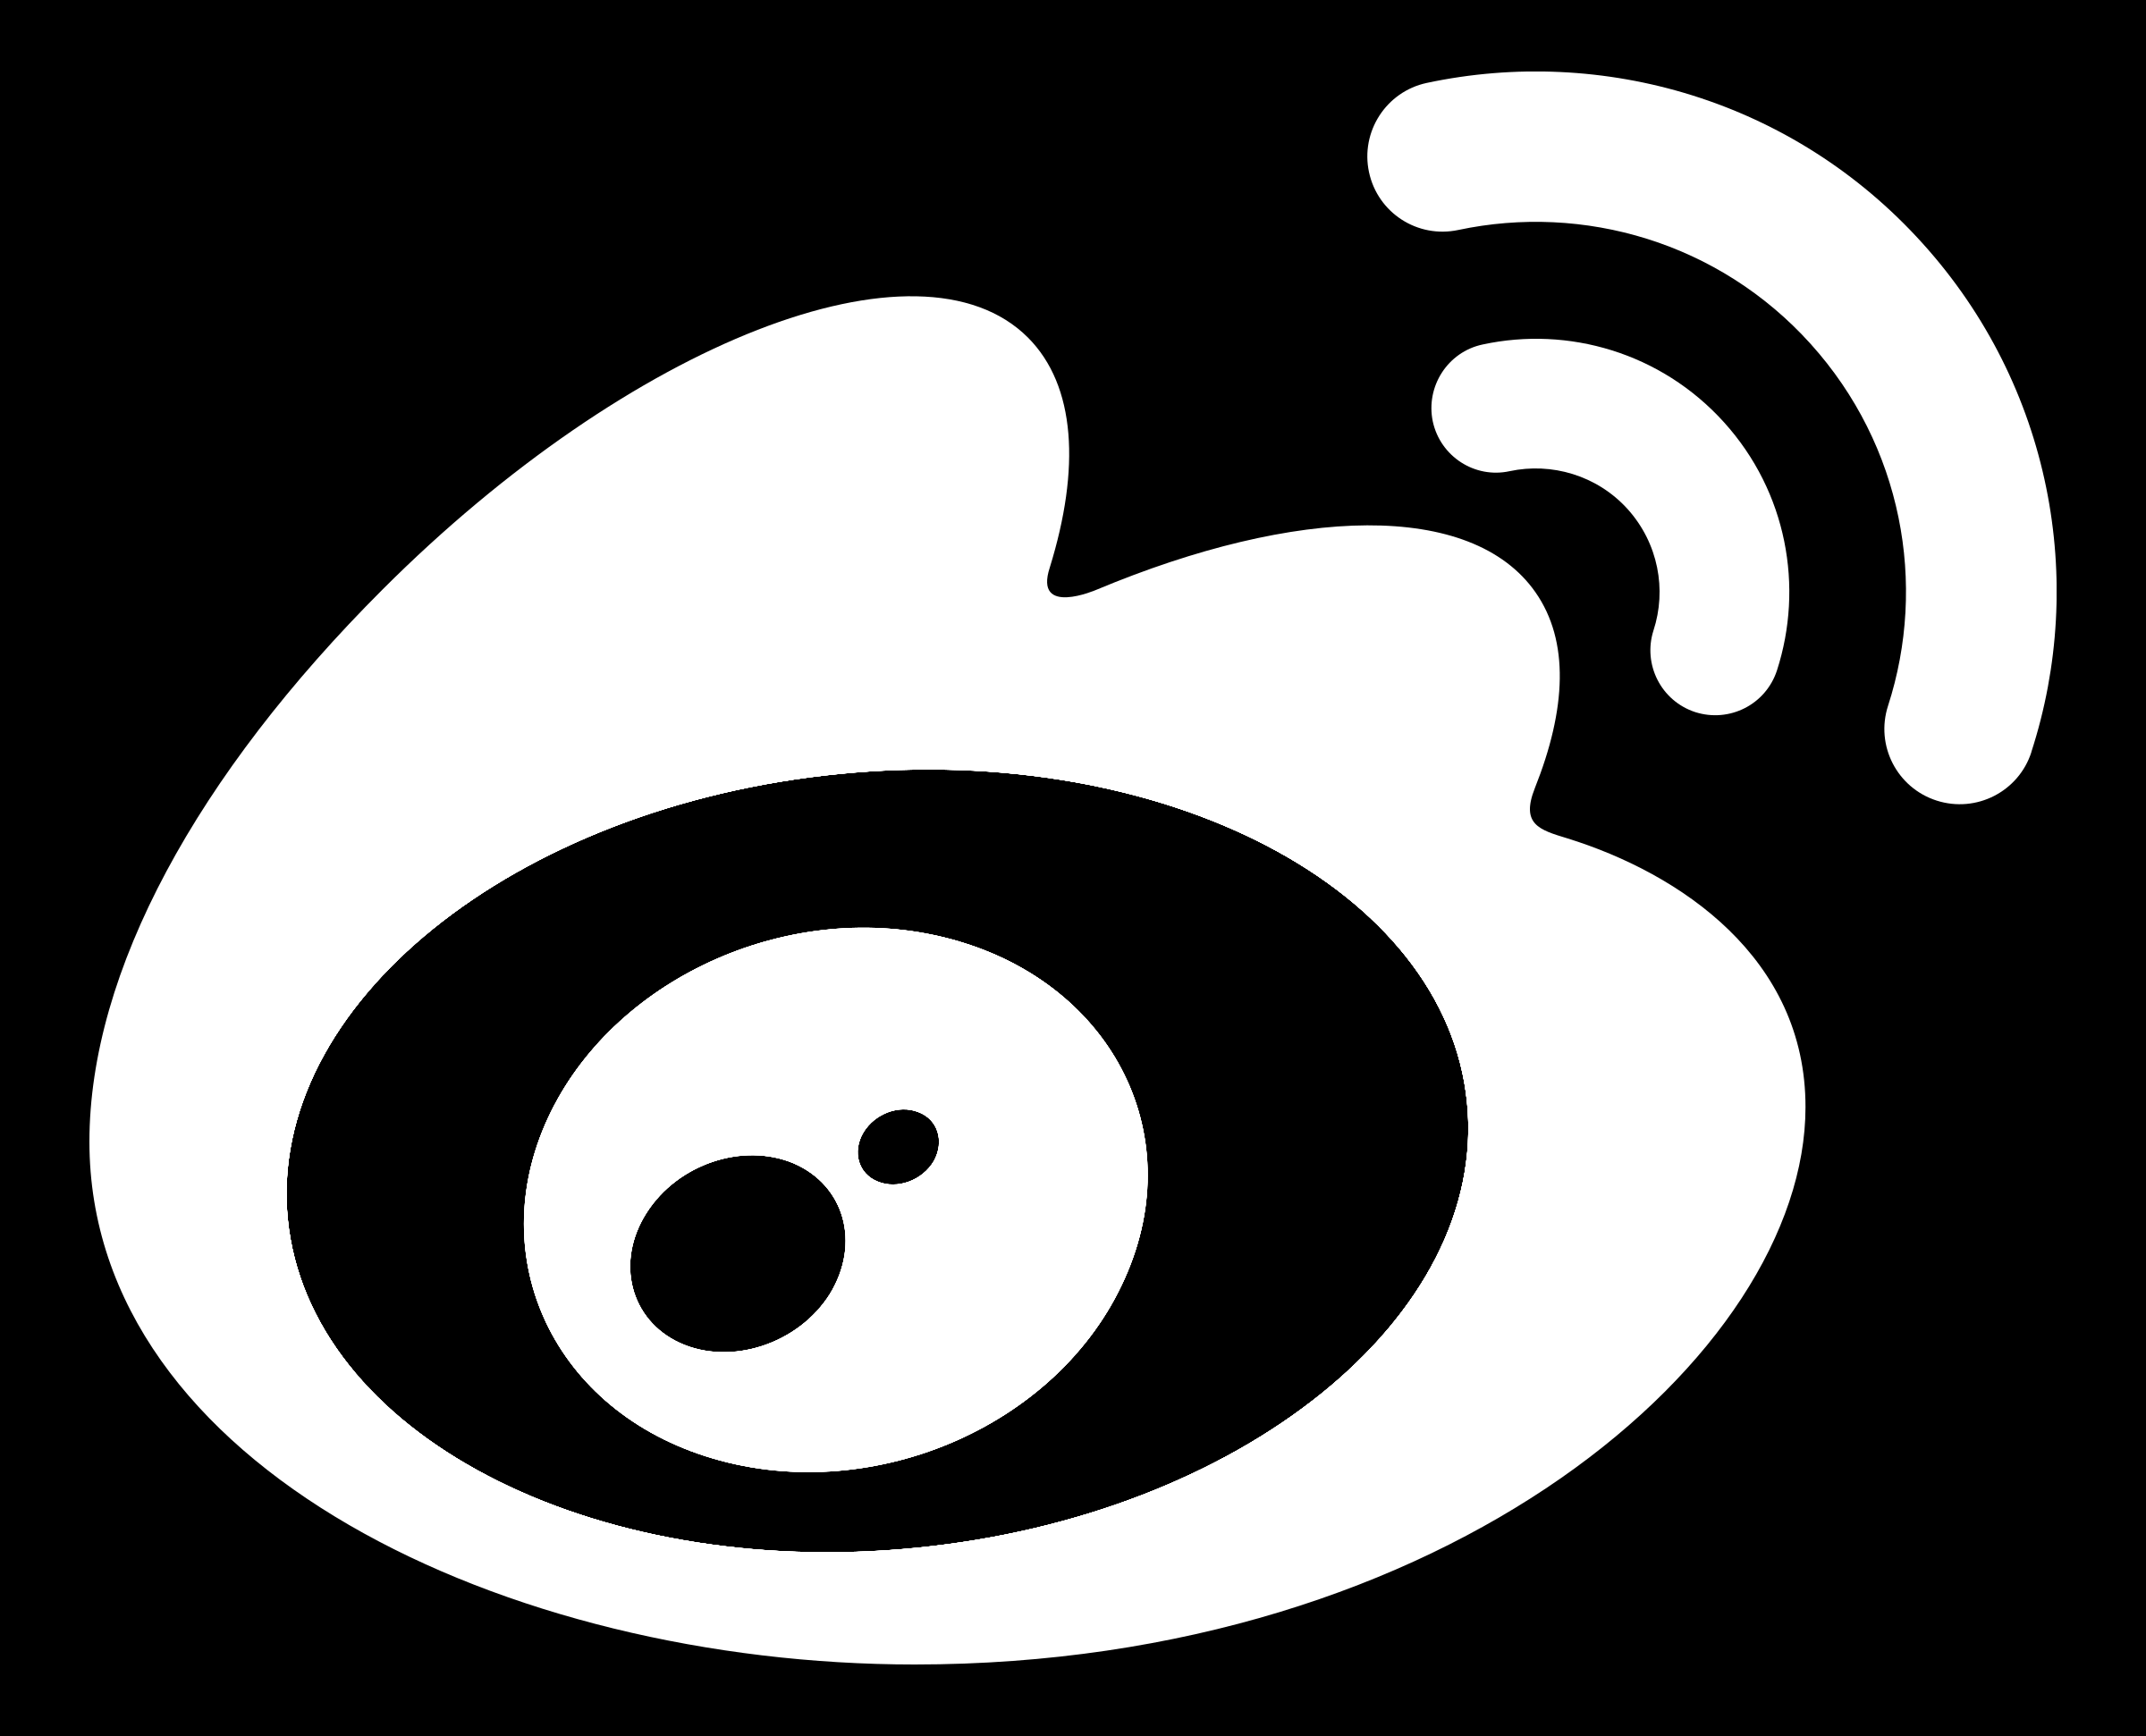 Weibo Logo - Weibo Logo PNG Transparent & SVG Vector - Freebie Supply